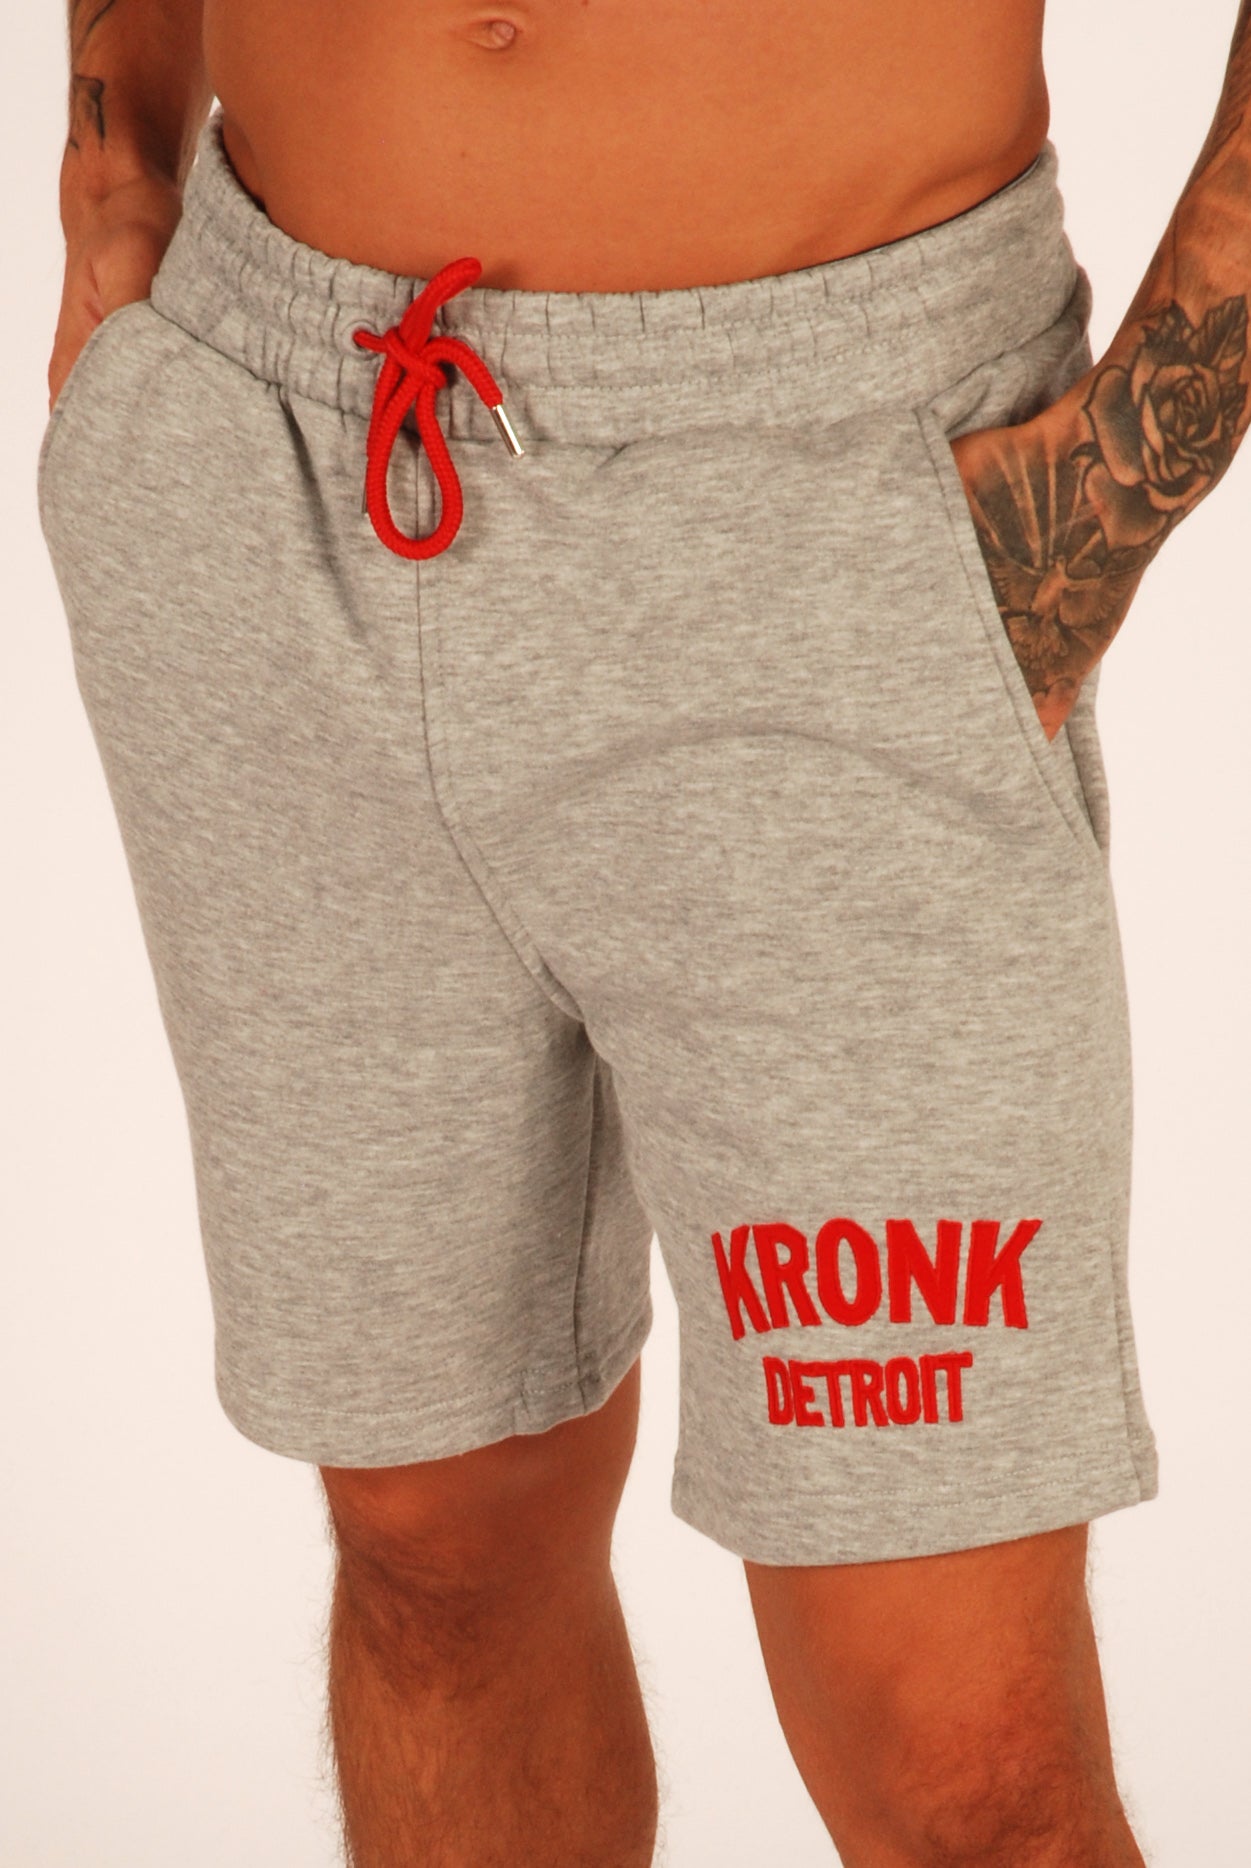 KRONK Detroit Jog Shorts Sports Grey with Red Applique logo